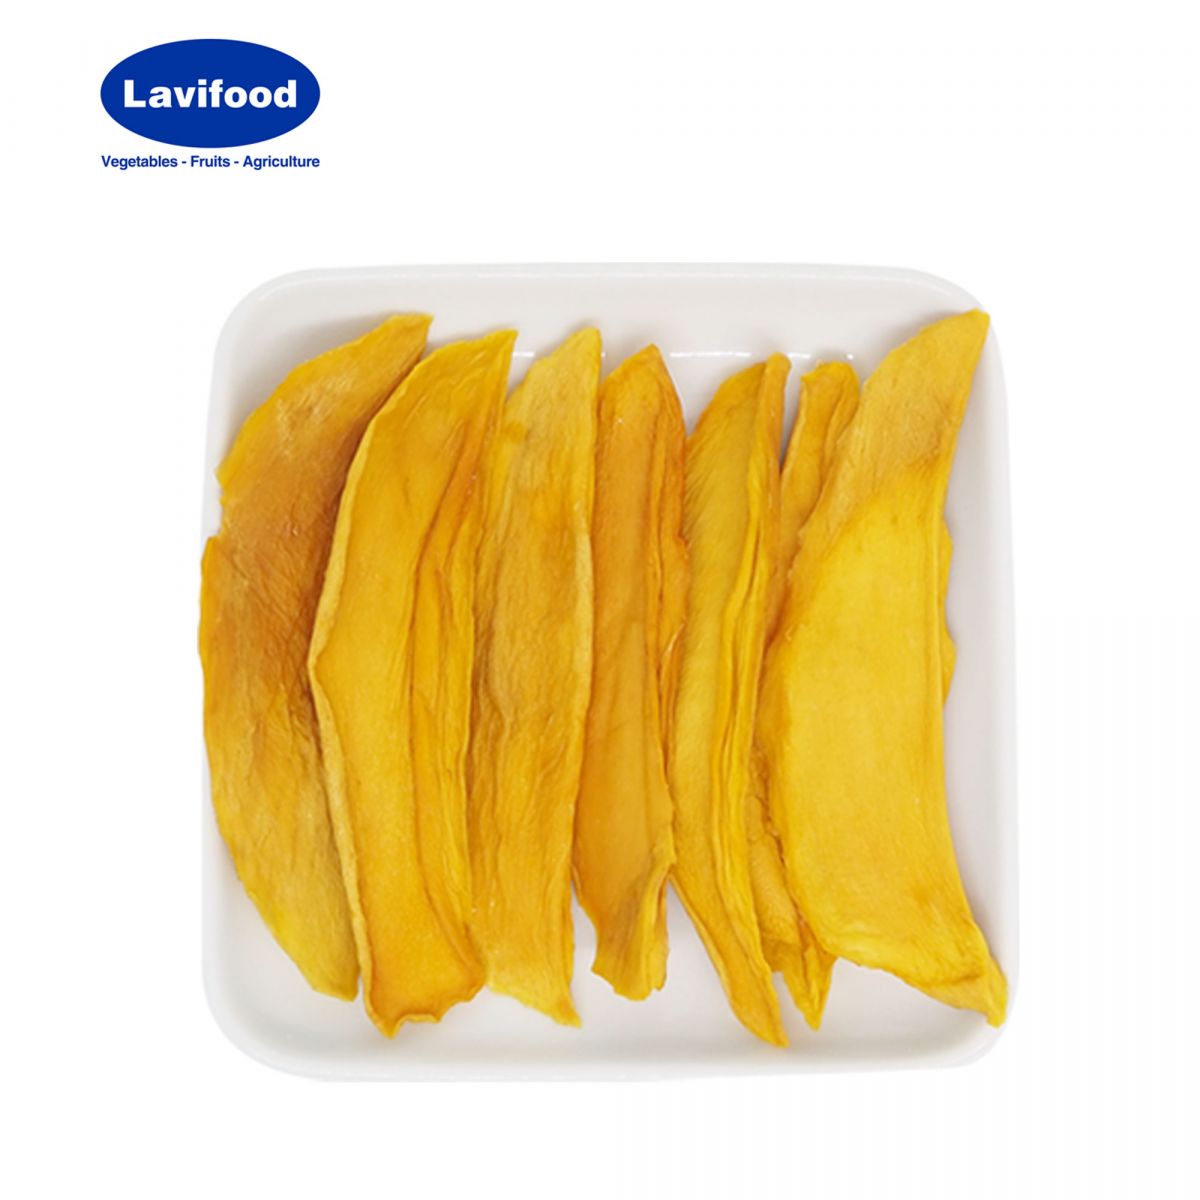 https://www.lavifood.com/en/products/dried-fruit-vegetables/dried-mango